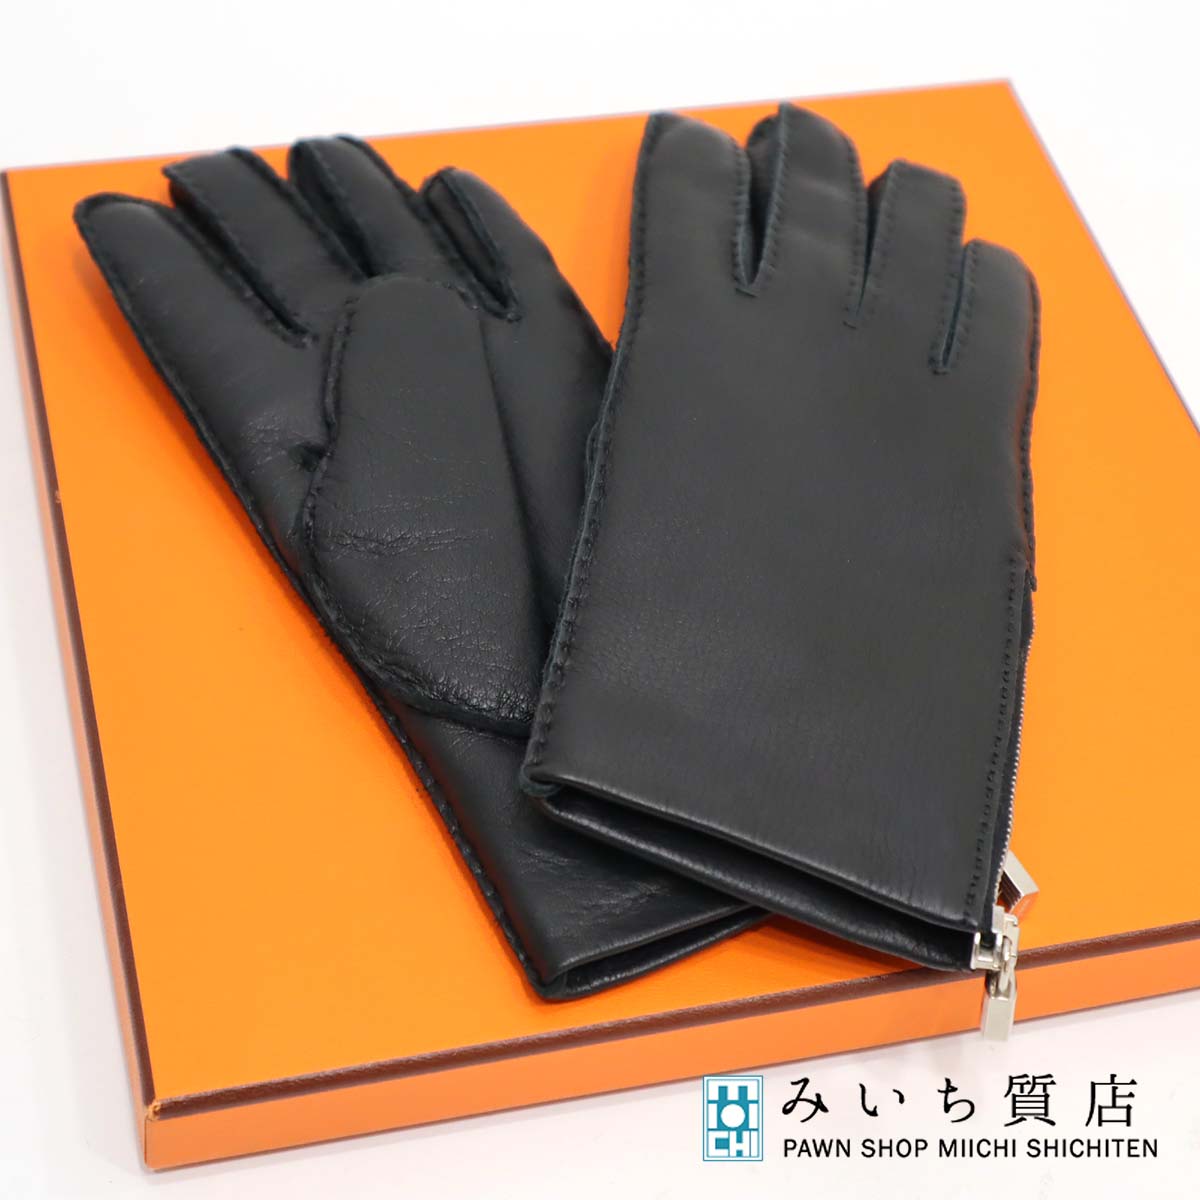 HERMES ラムスキン 手袋 グローブ サイズ6(S) 手袋/アームカバー 小物 レディース 永久保証